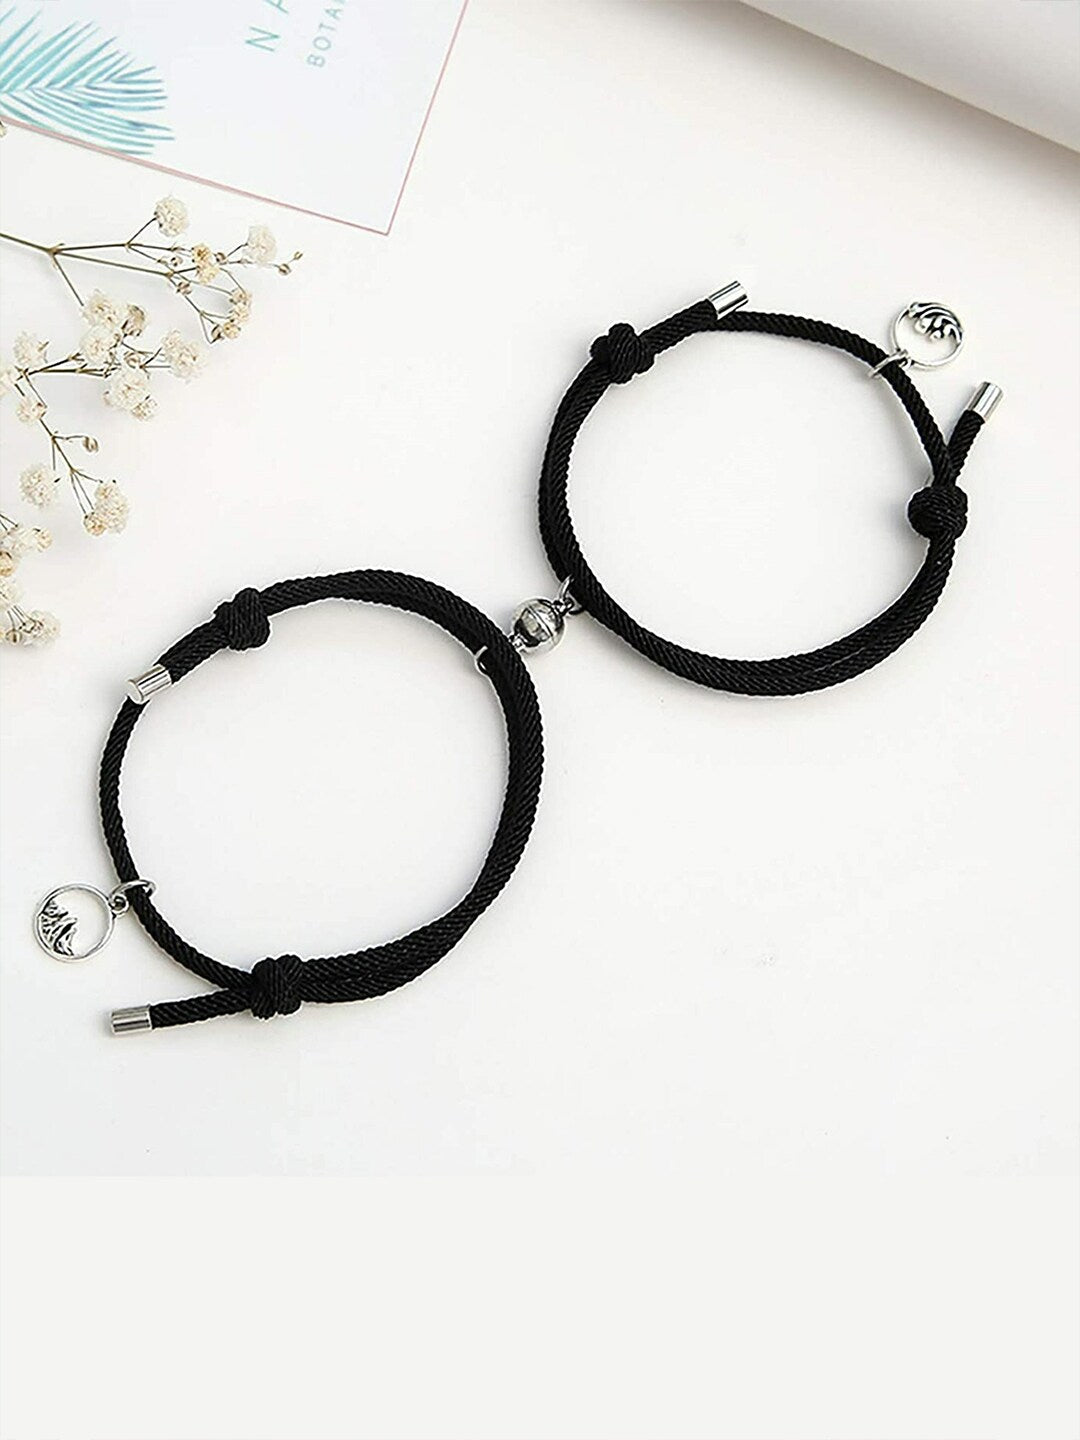 EL REGALO Men Set of 2 Black & Silver-Toned Antique Charm Bracelet - for Men
Style ID: 17047704